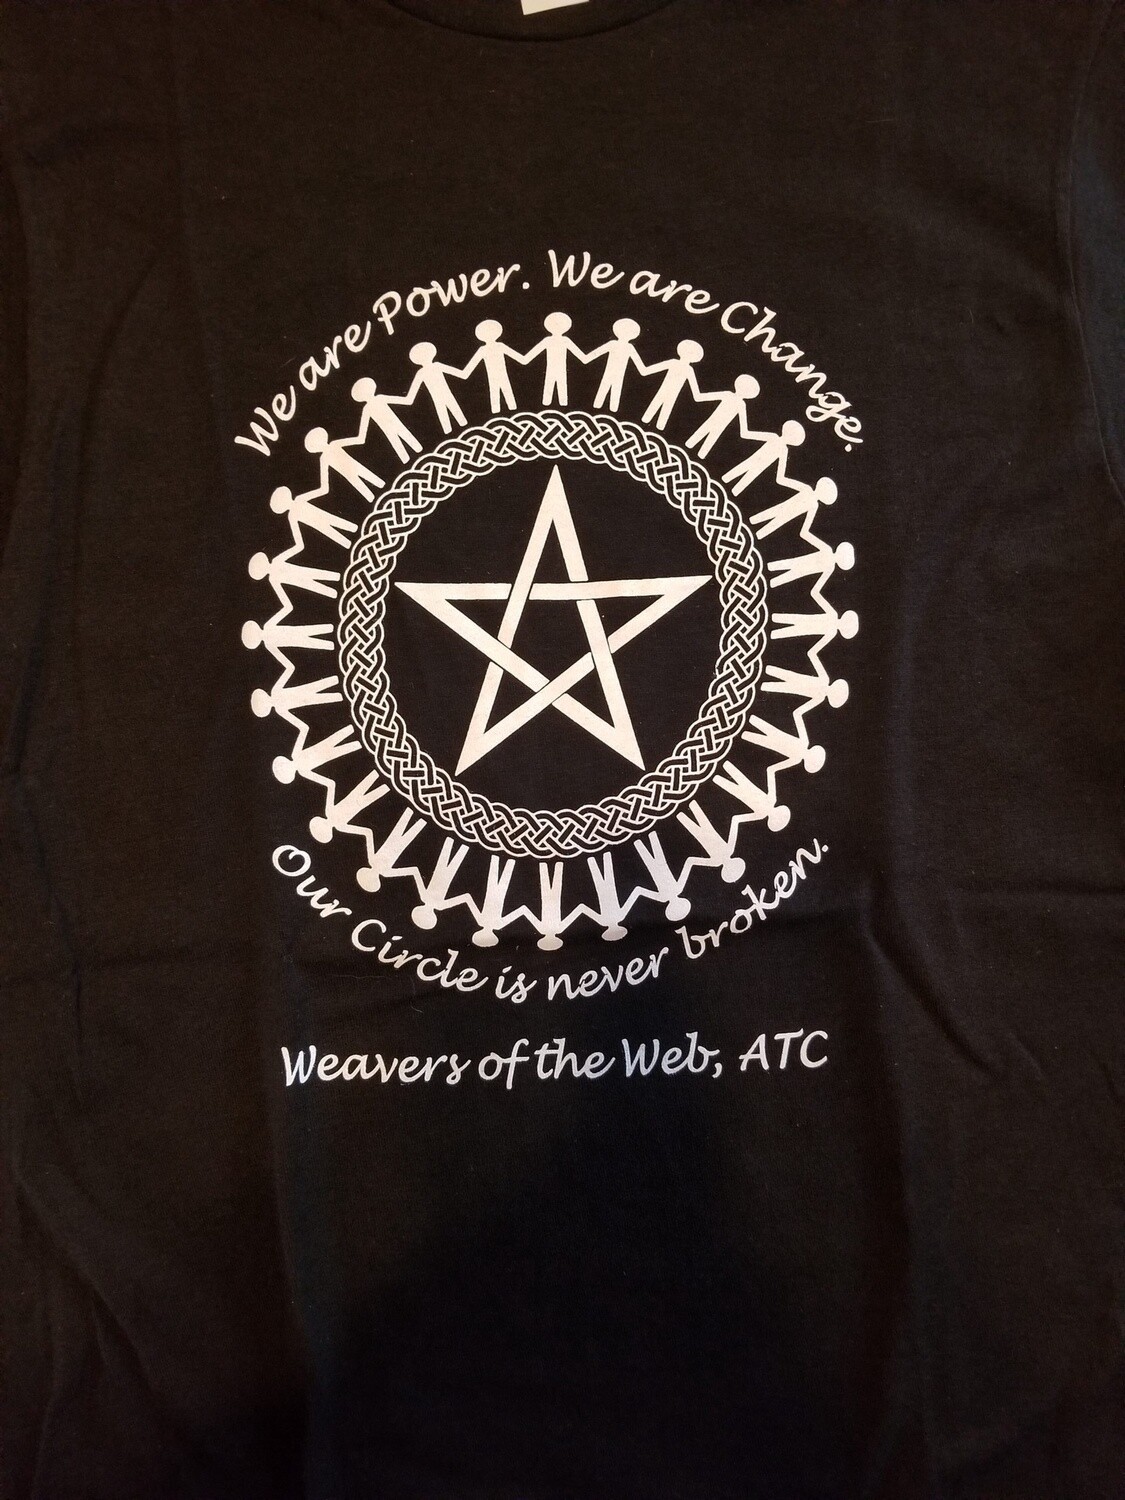 Weavers of the Web Shirts, Shirt Color: Black, Print Color: White, Size: XS